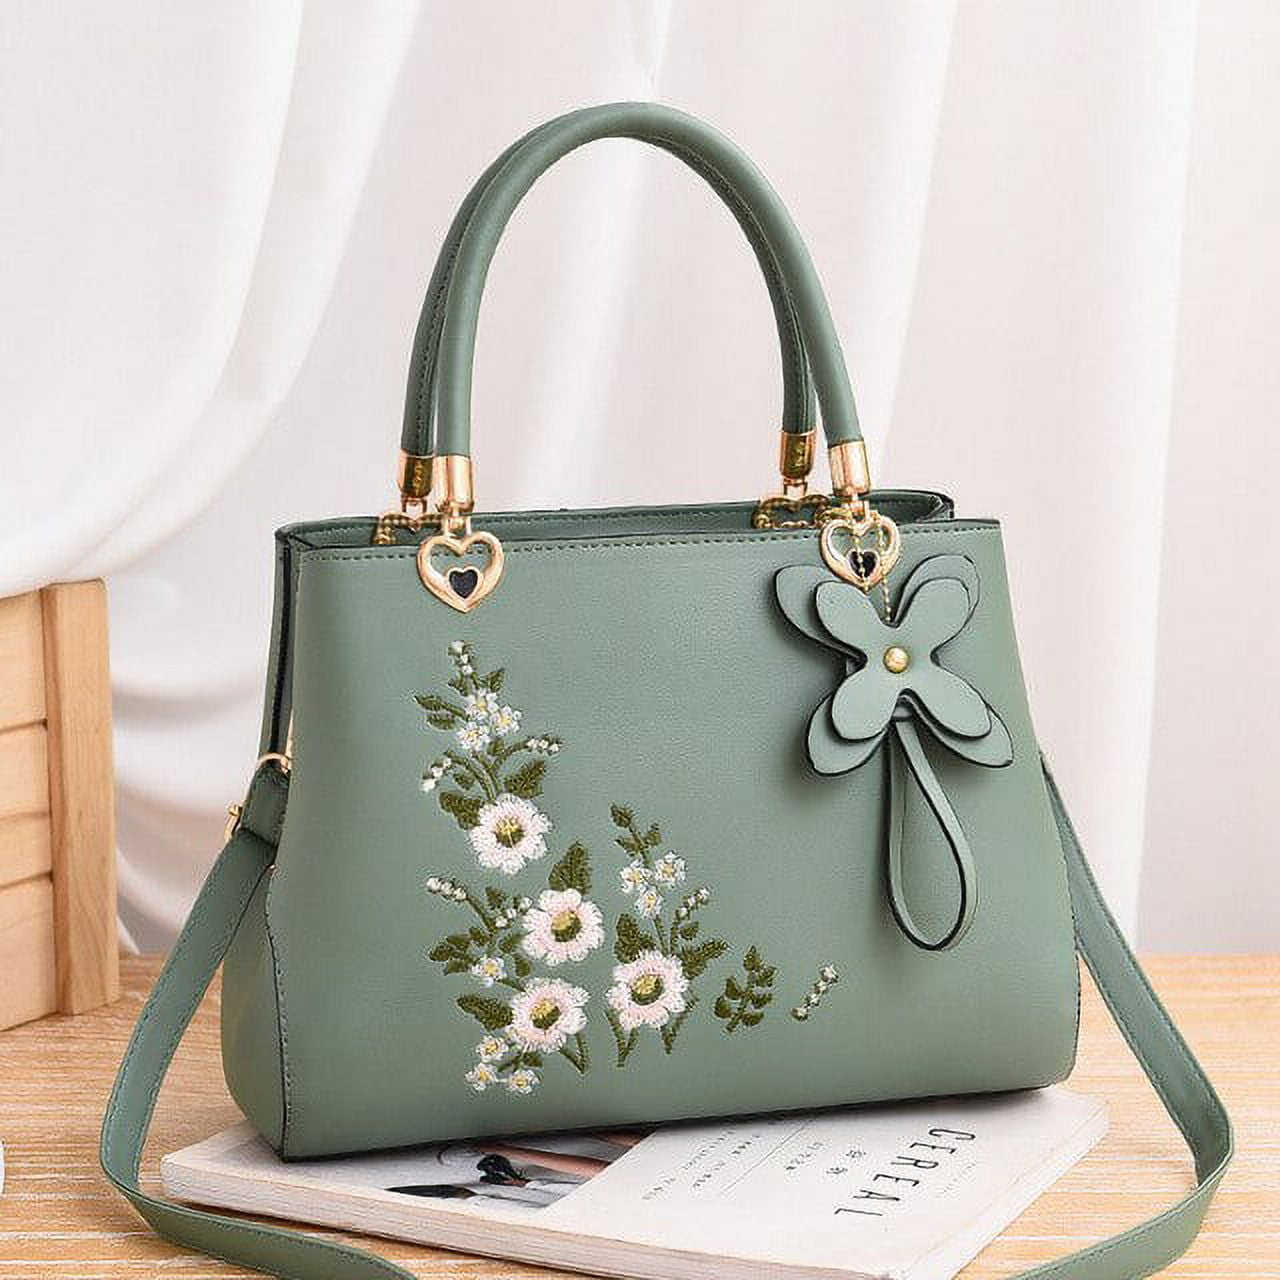 Buy Ladila Girls, Ladies Purse Handbag Hand-held Bag - (Beige) at Amazon.in